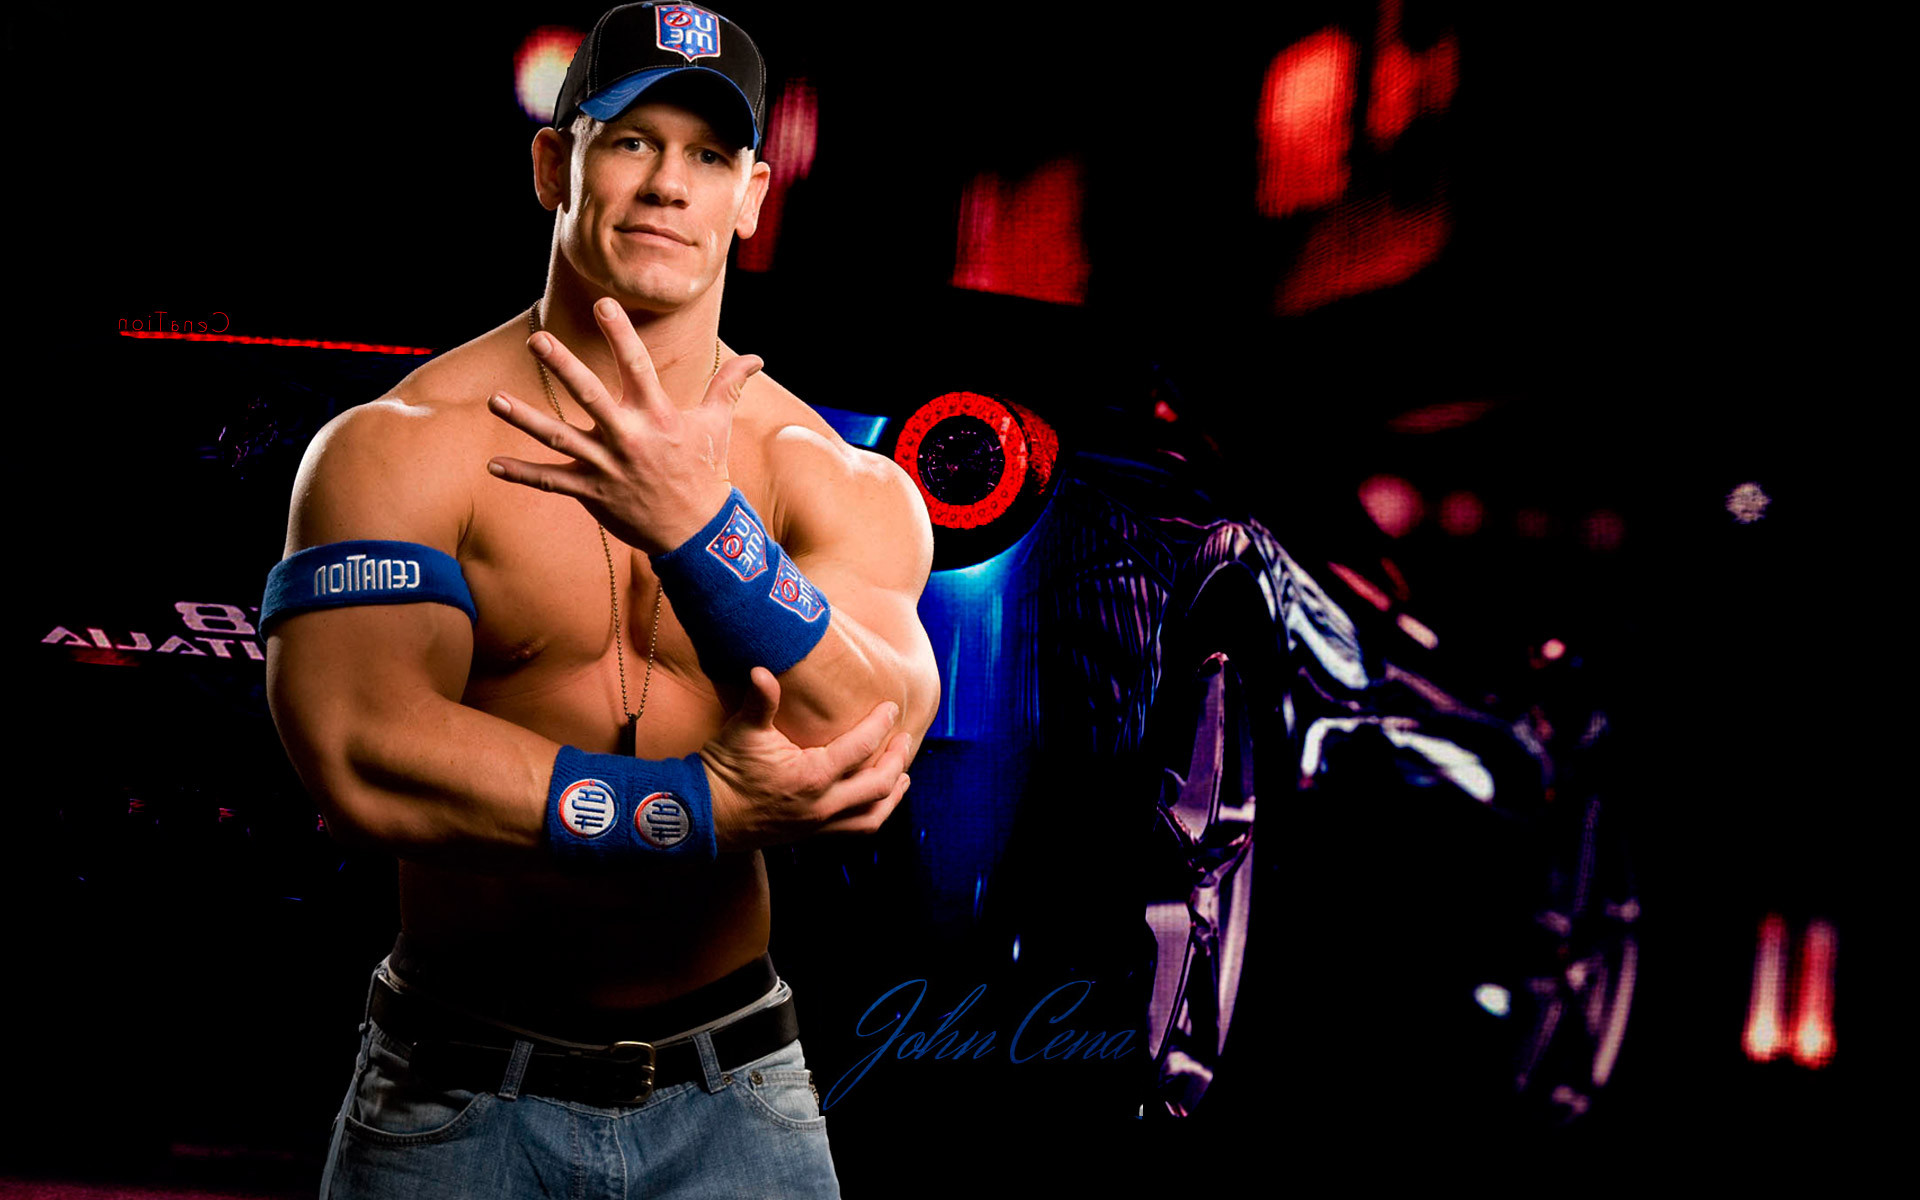 John Cena Wallpaper HD Image